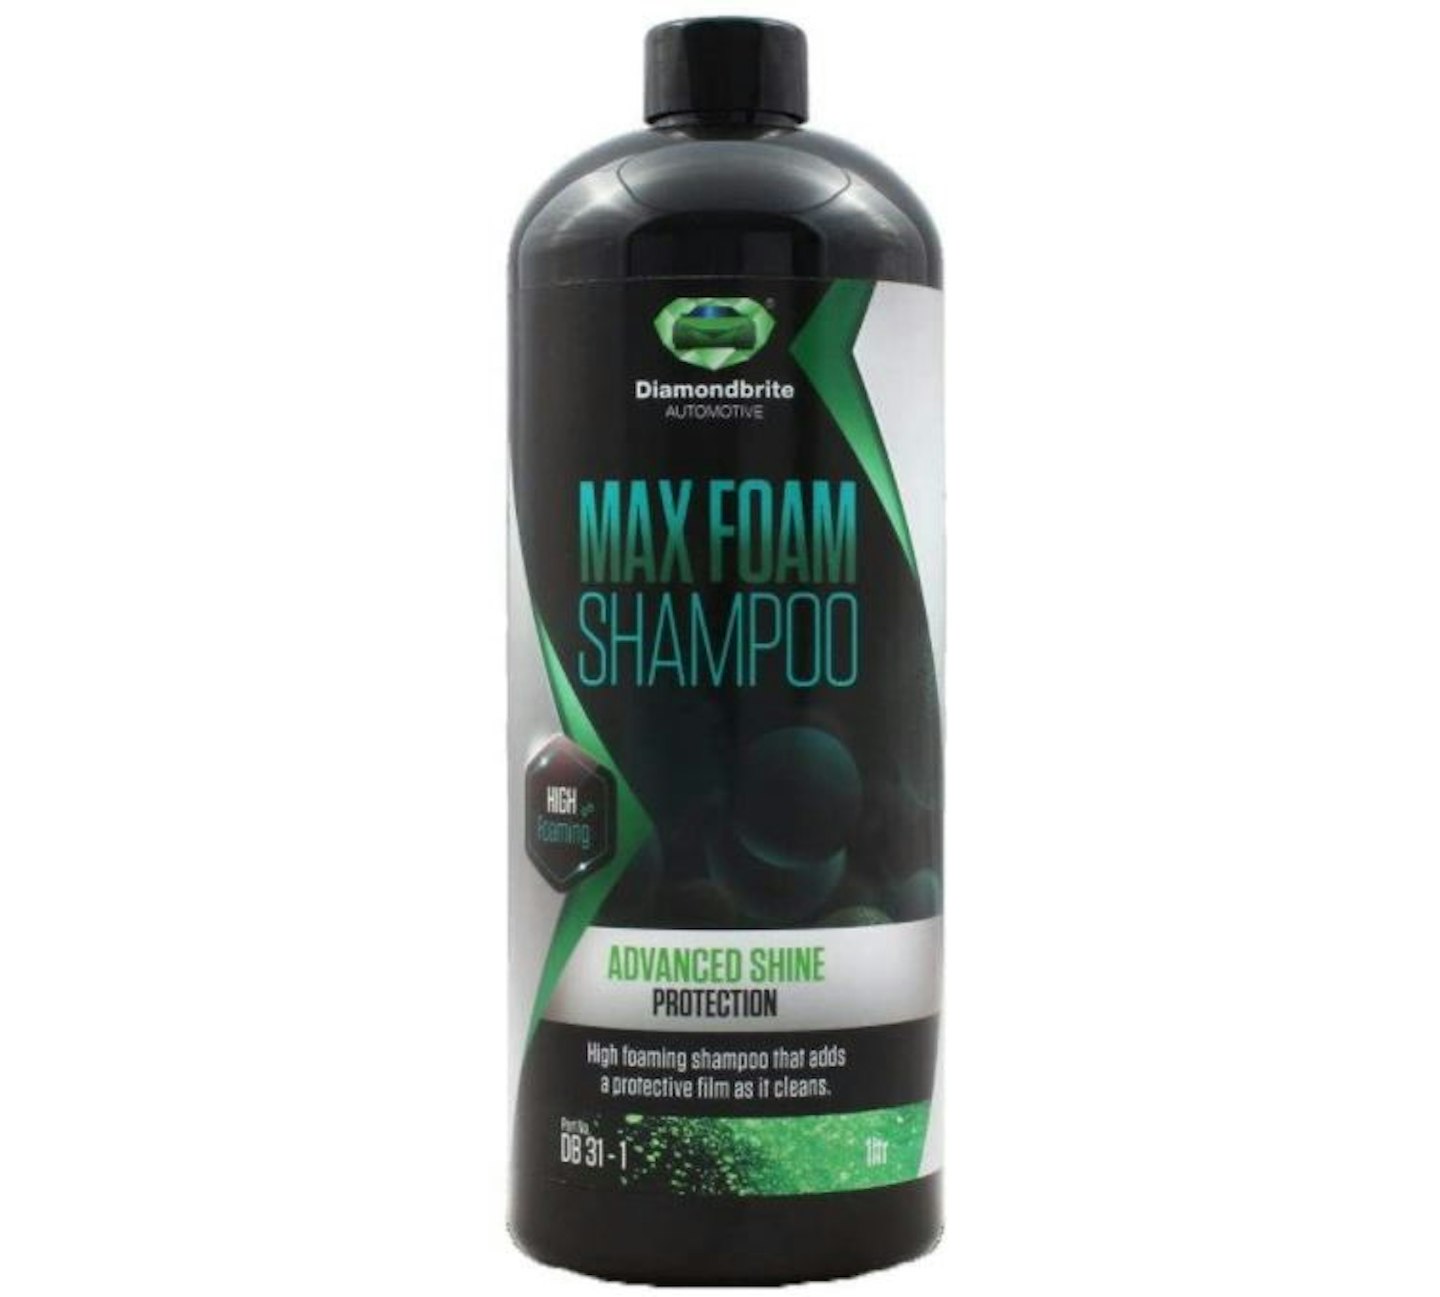 Diamondbrite Max Foam Shampoo